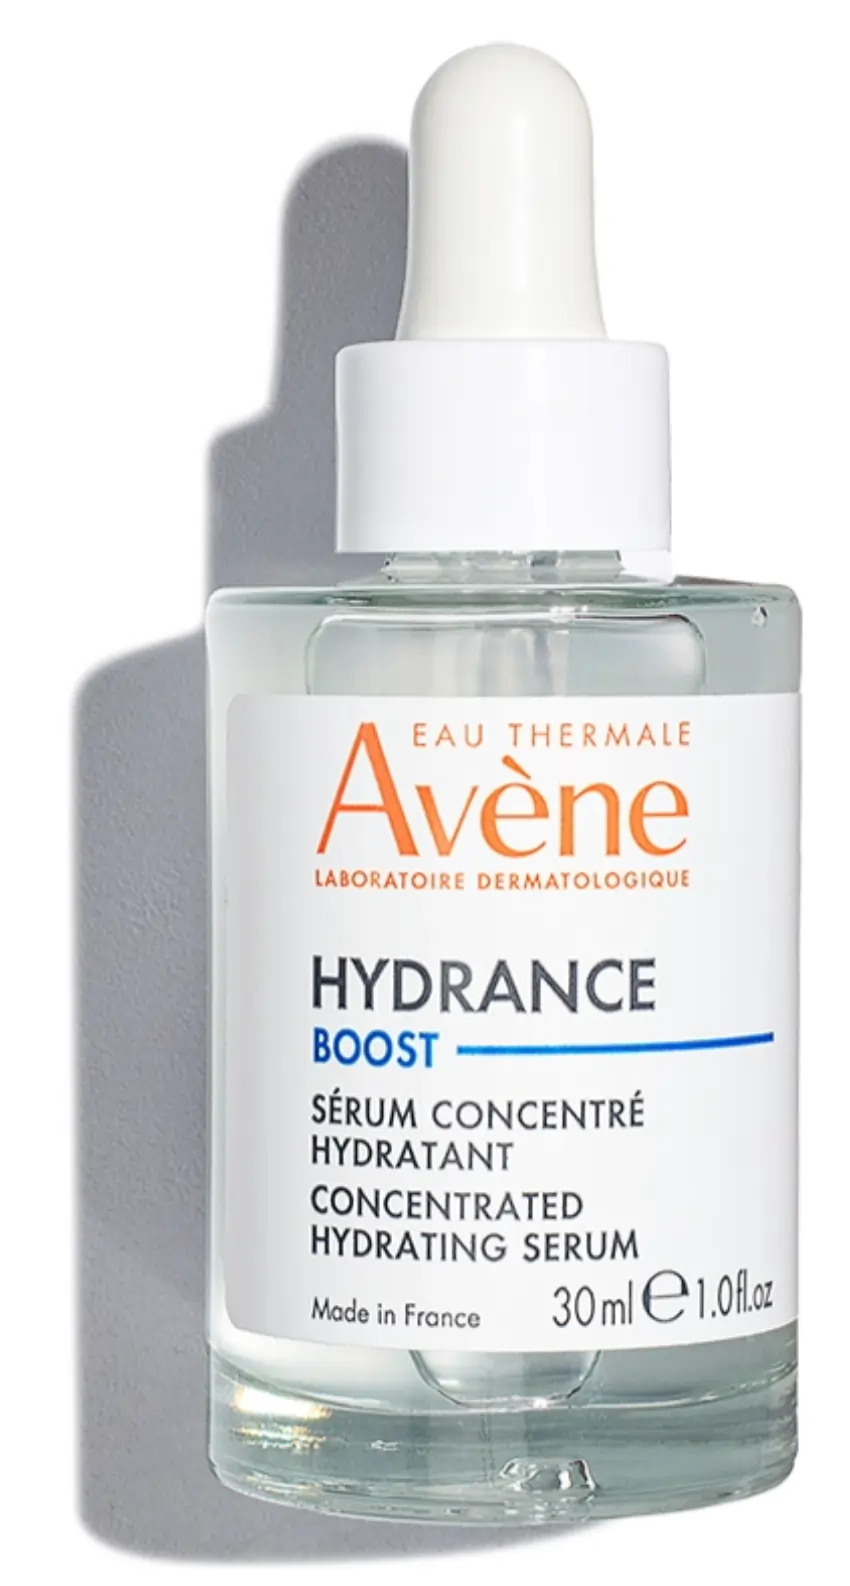 FEMMENORDIC's choice, the Avene Hydrance Intense Rehydrating Serum.